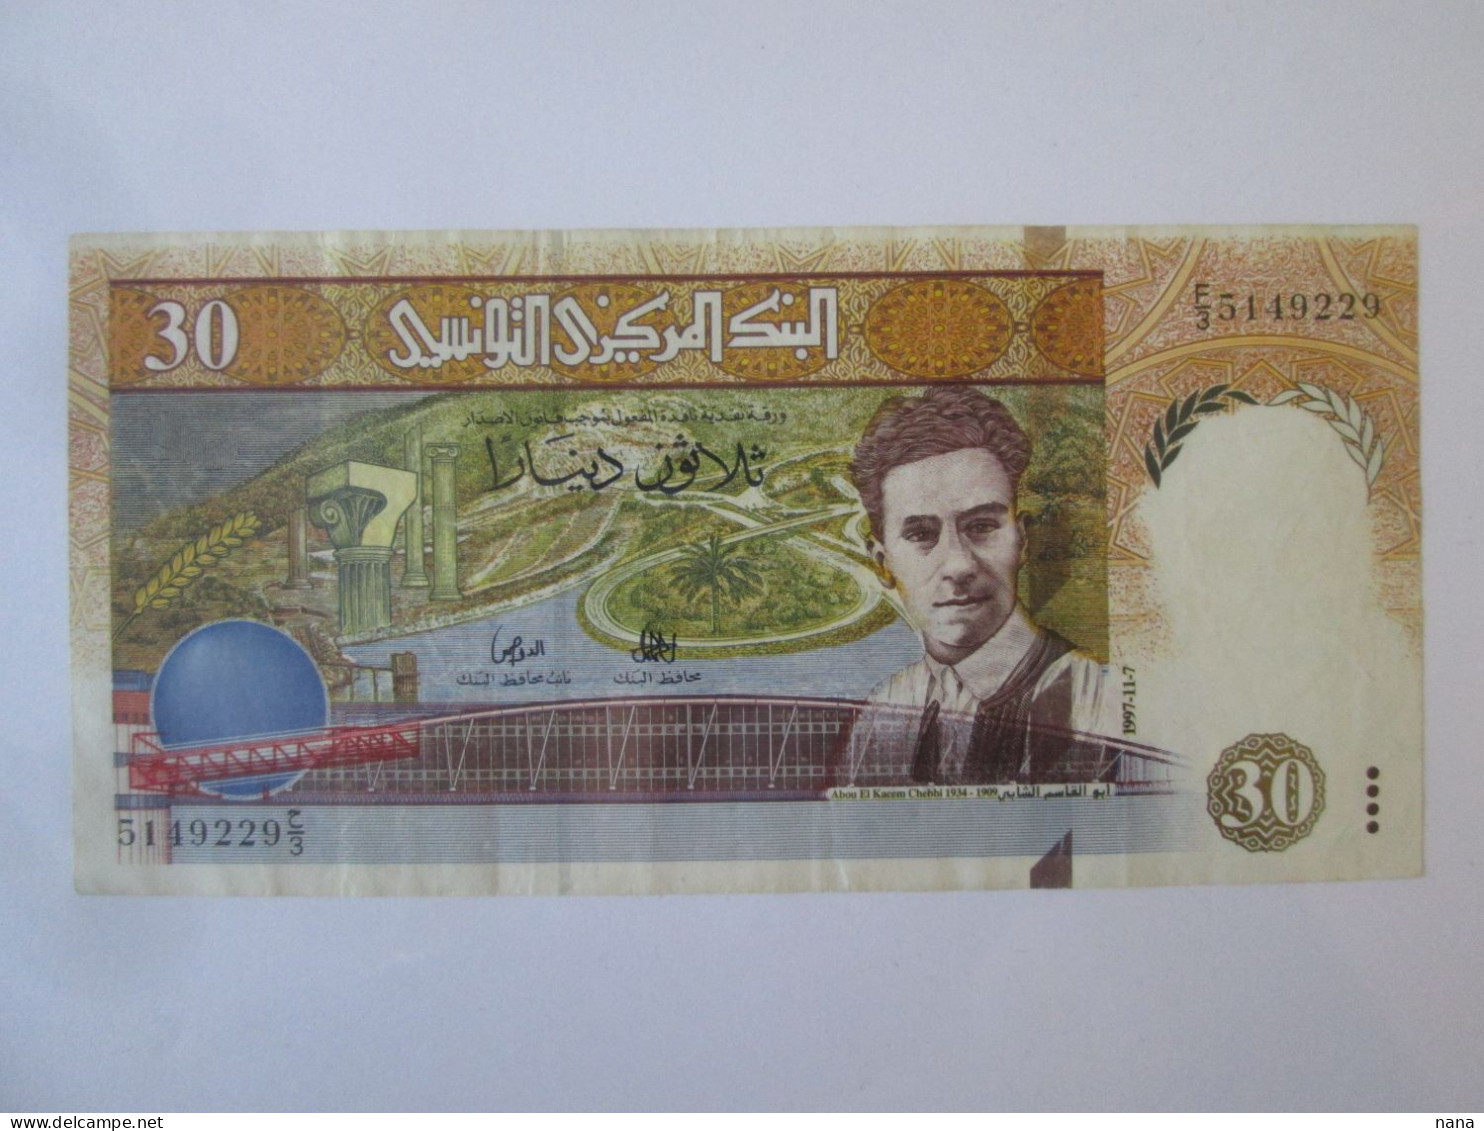 Tunisia/Tunisie 30 Dinars 1997 Banknote AUNC See Pictures - Tunesien